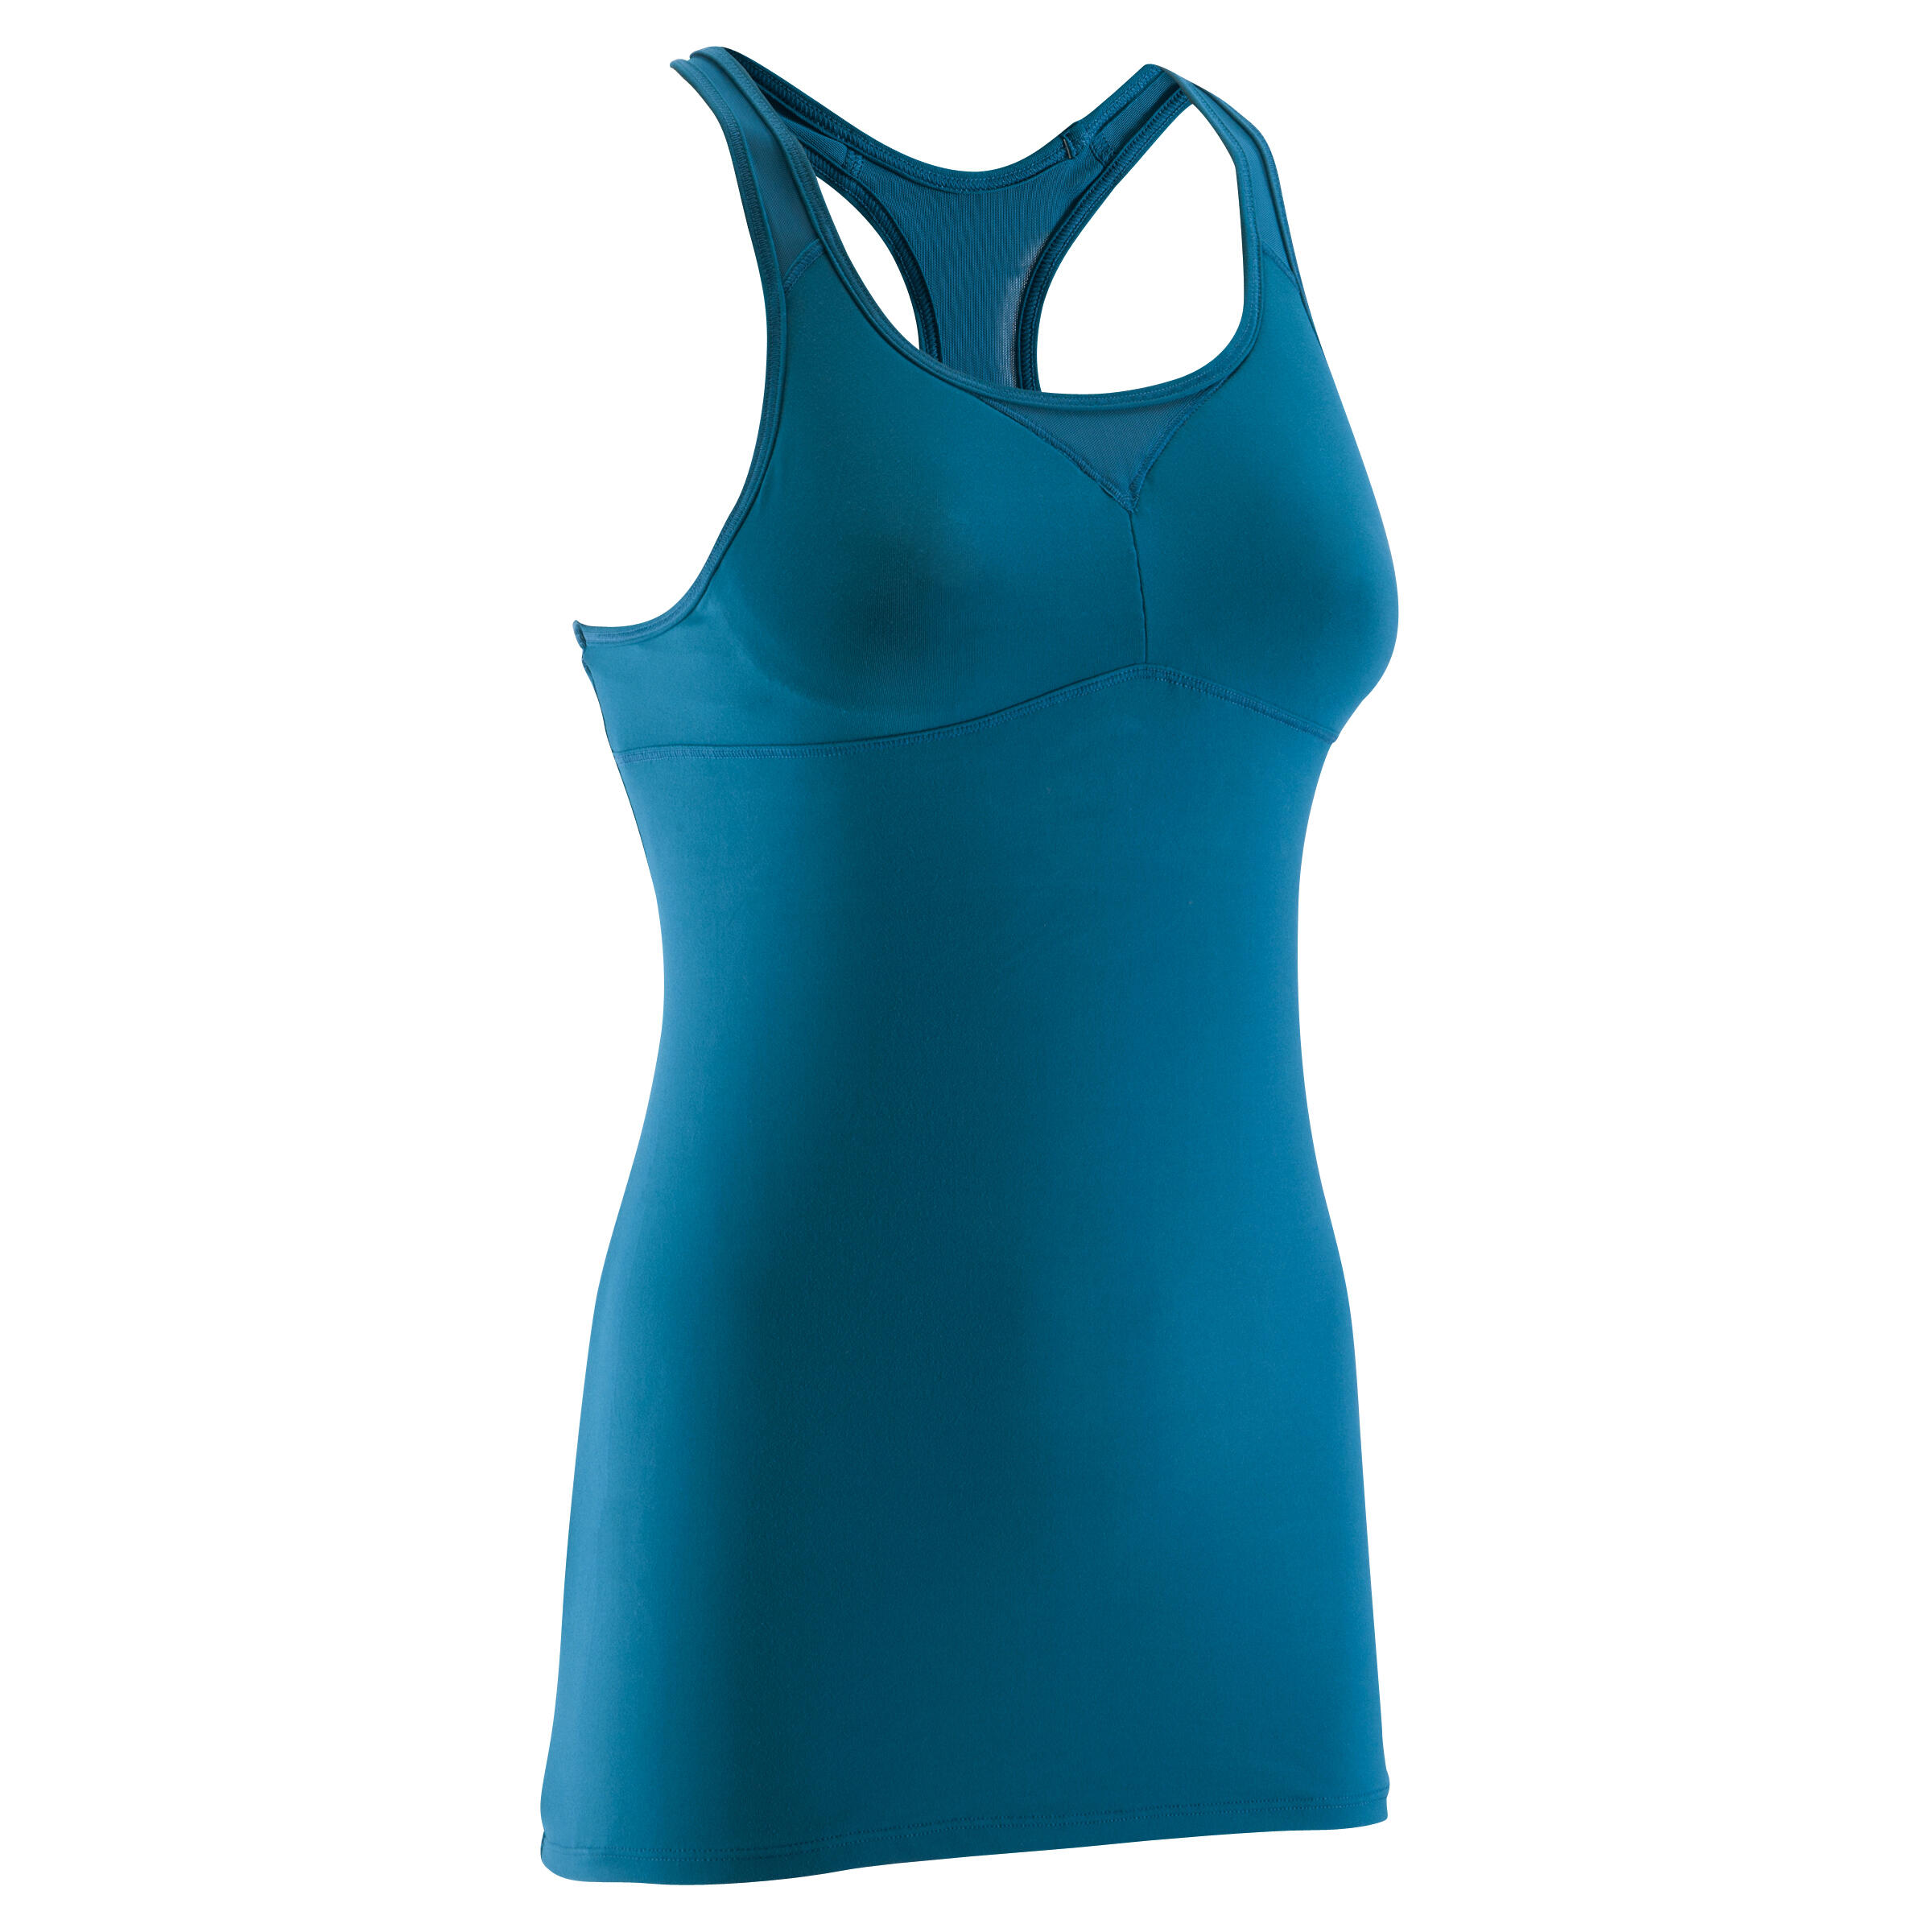 DOMYOS Energy Xtreme Women's Fitness Tank Top - Blue/Green